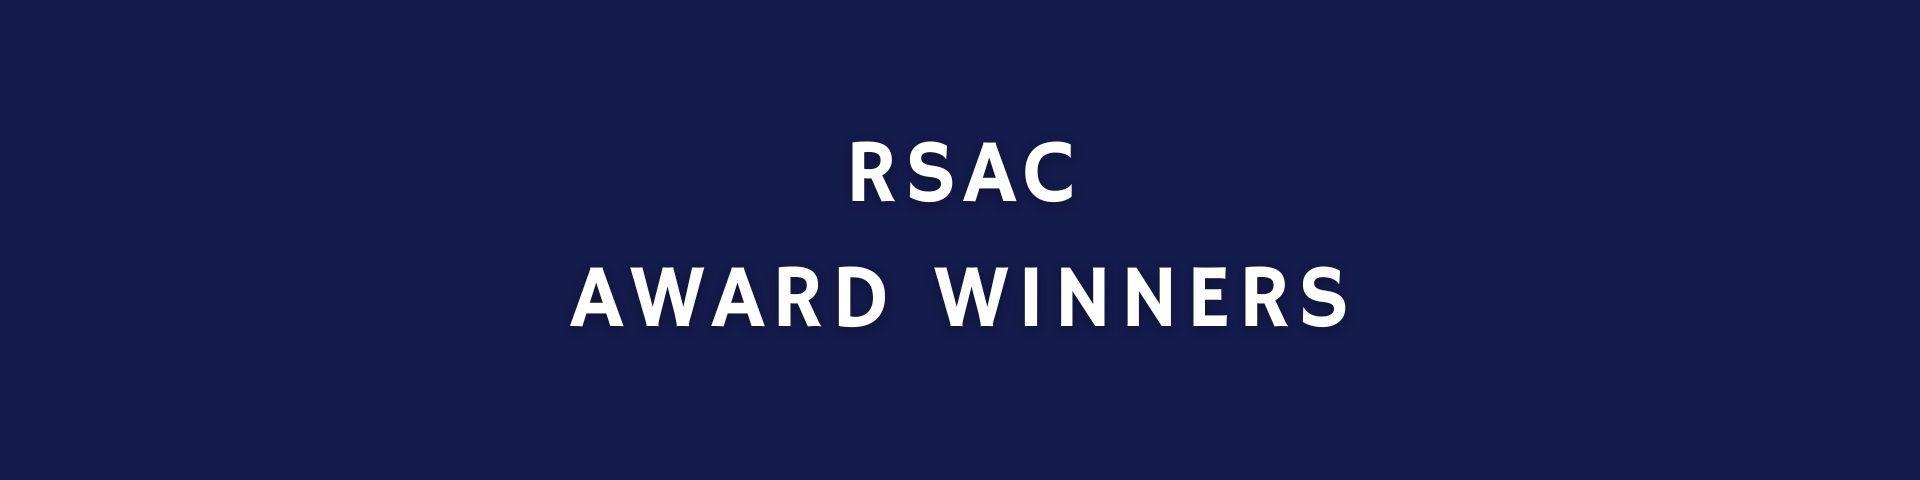 RSAC Award Winners